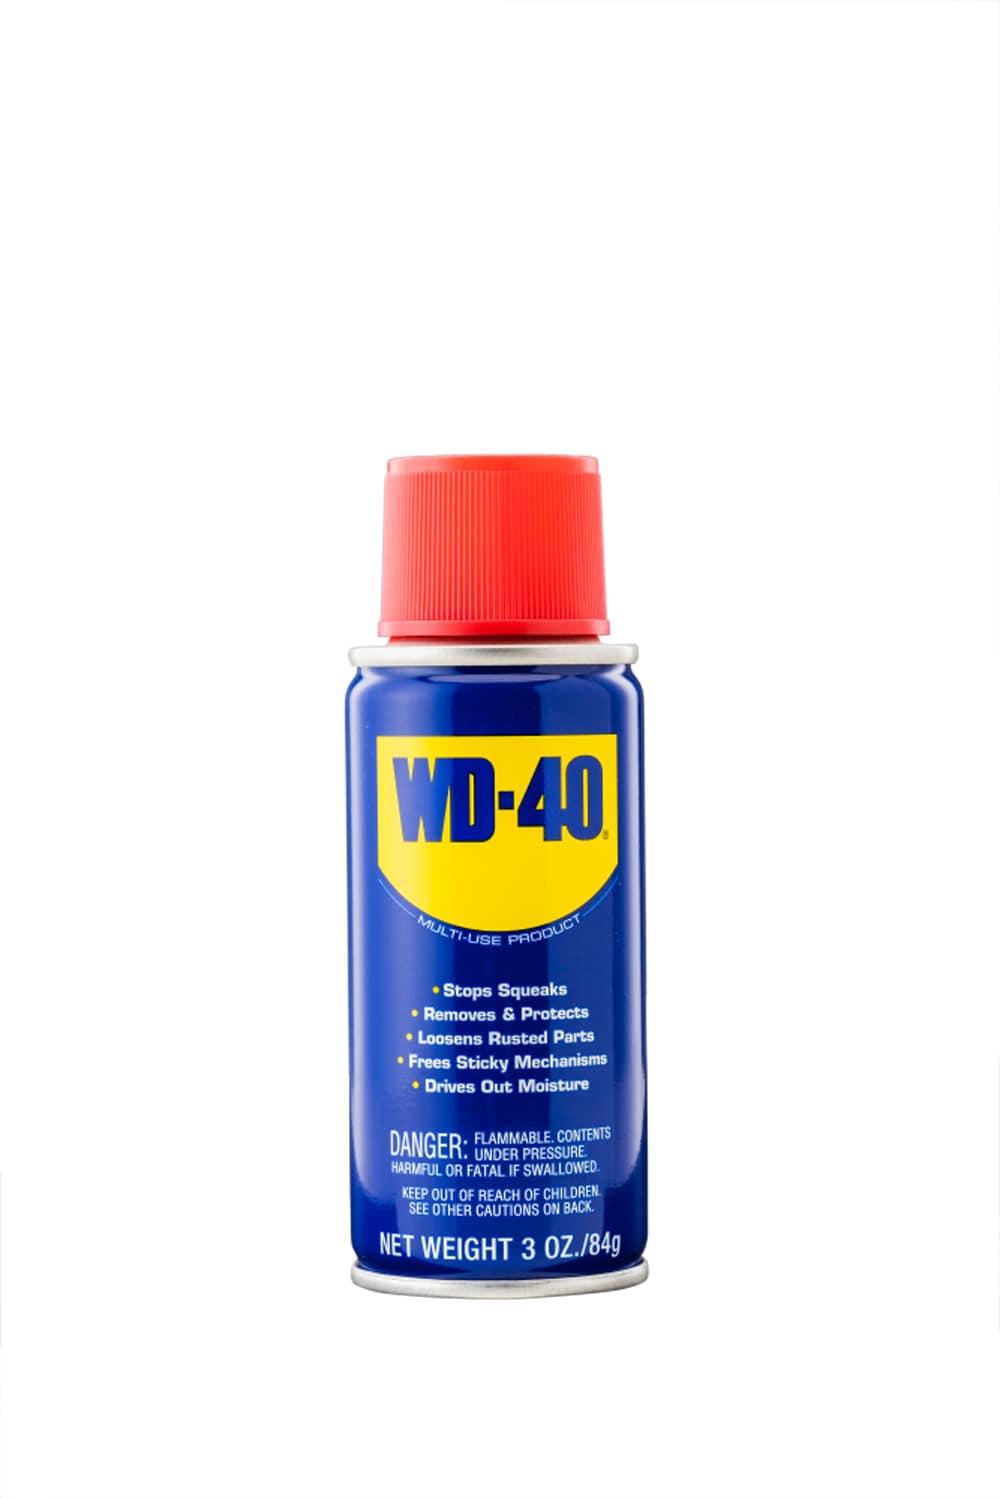 WD-40 Original WD-40 Formula, Multi-Purpose 3-oz Lubricant Spray